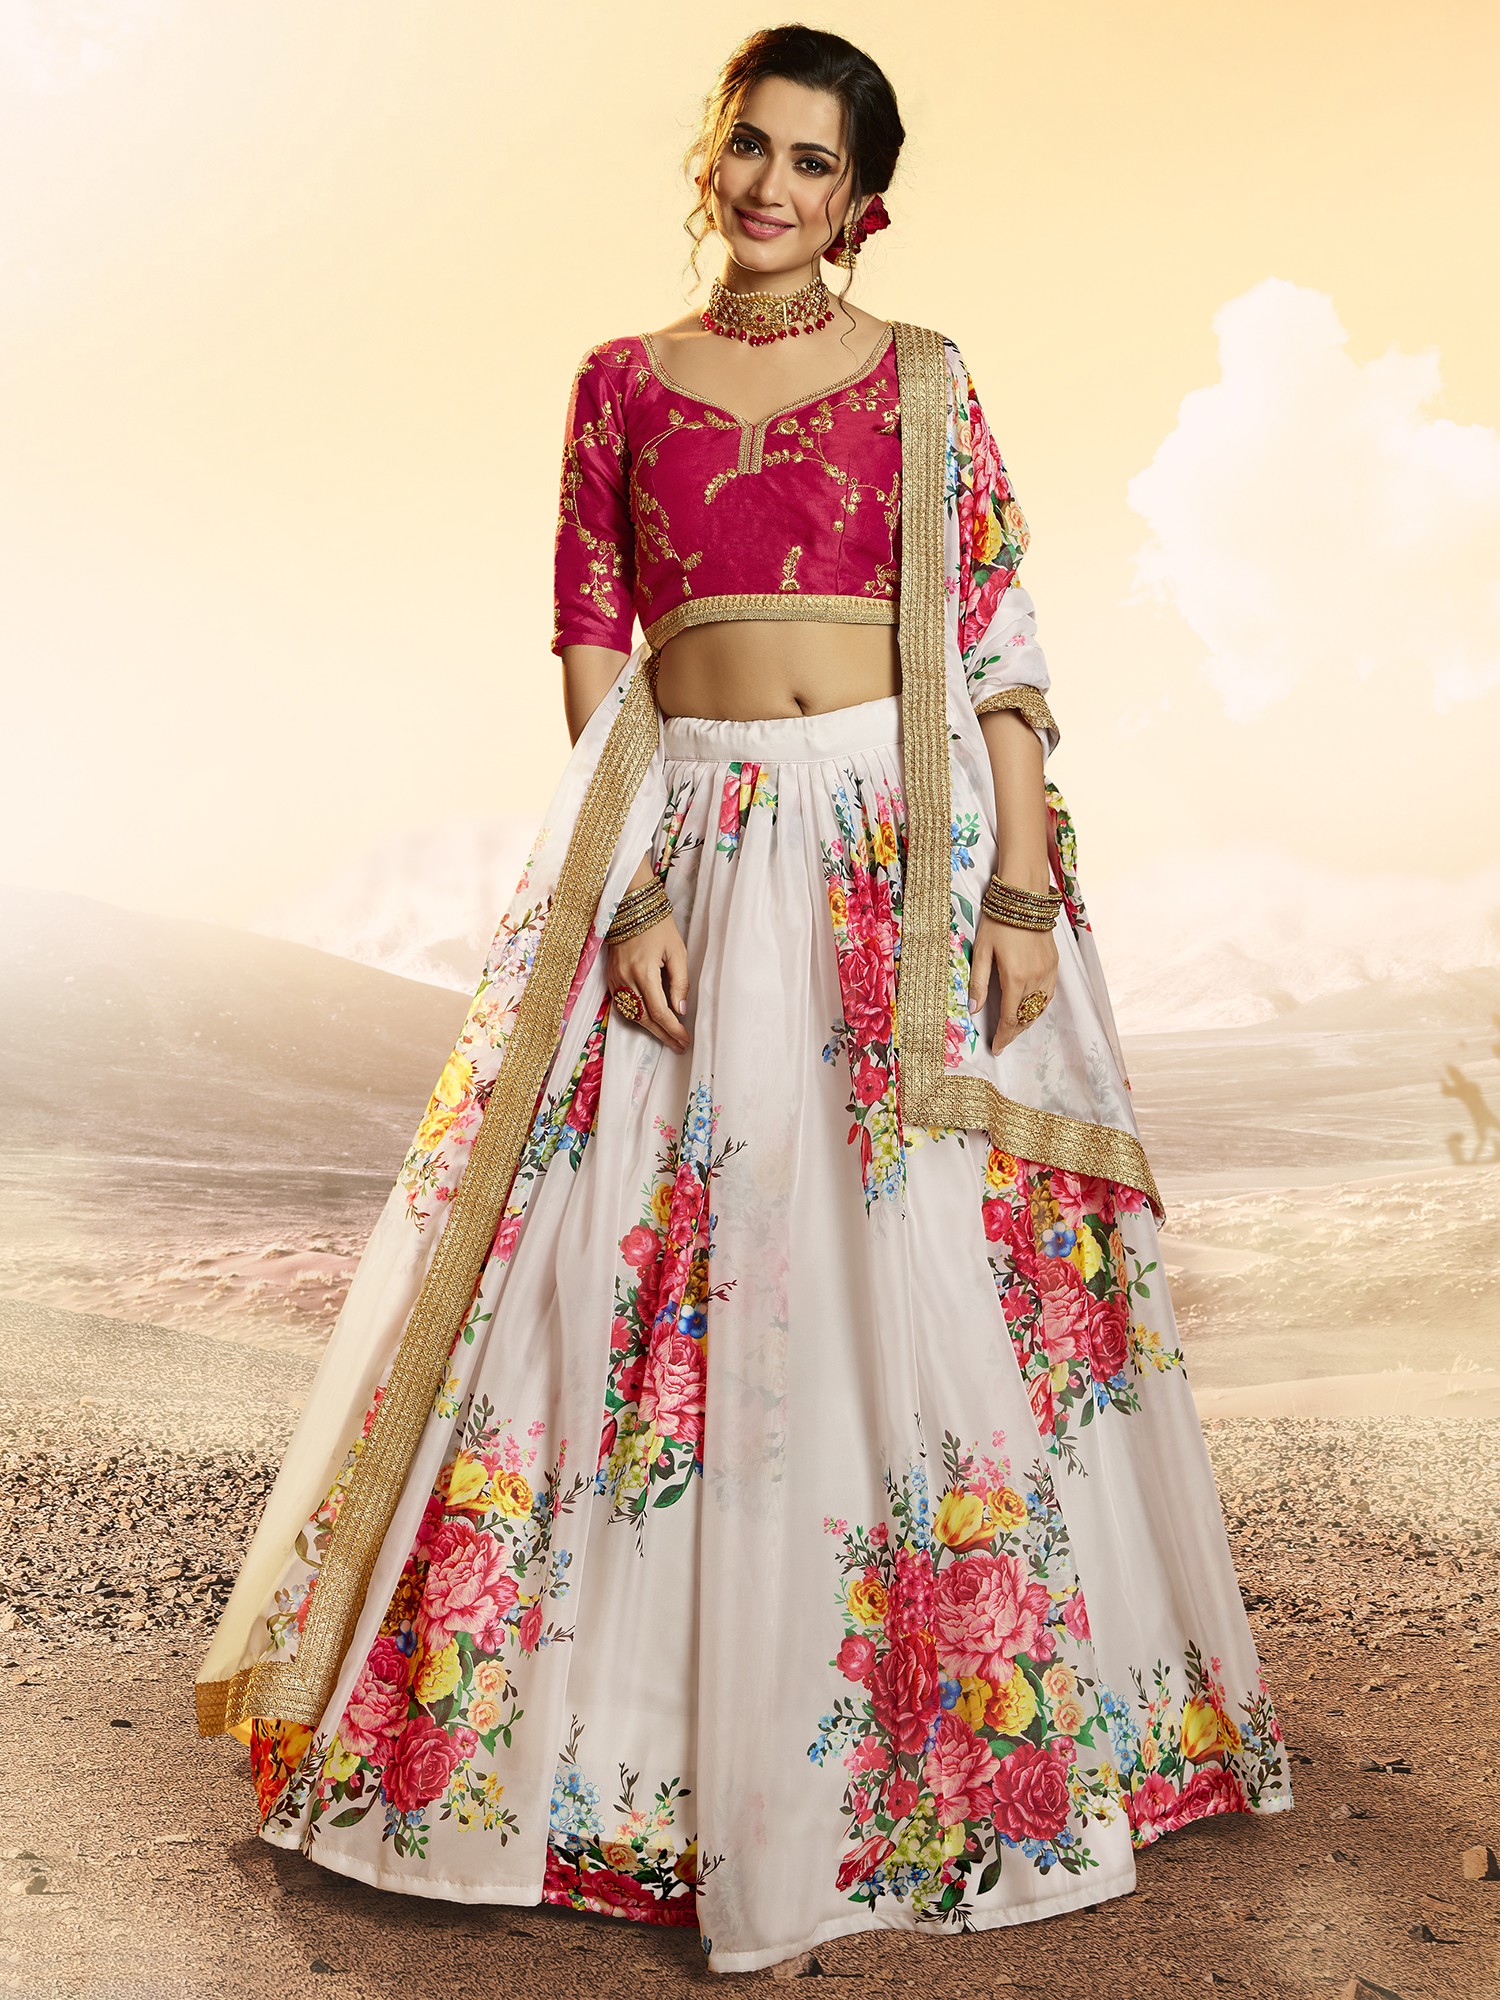 Women's Ethnic Digital Print Lehenga Choli Wedding Party Fancy Lengha Skirt  Wear | eBay